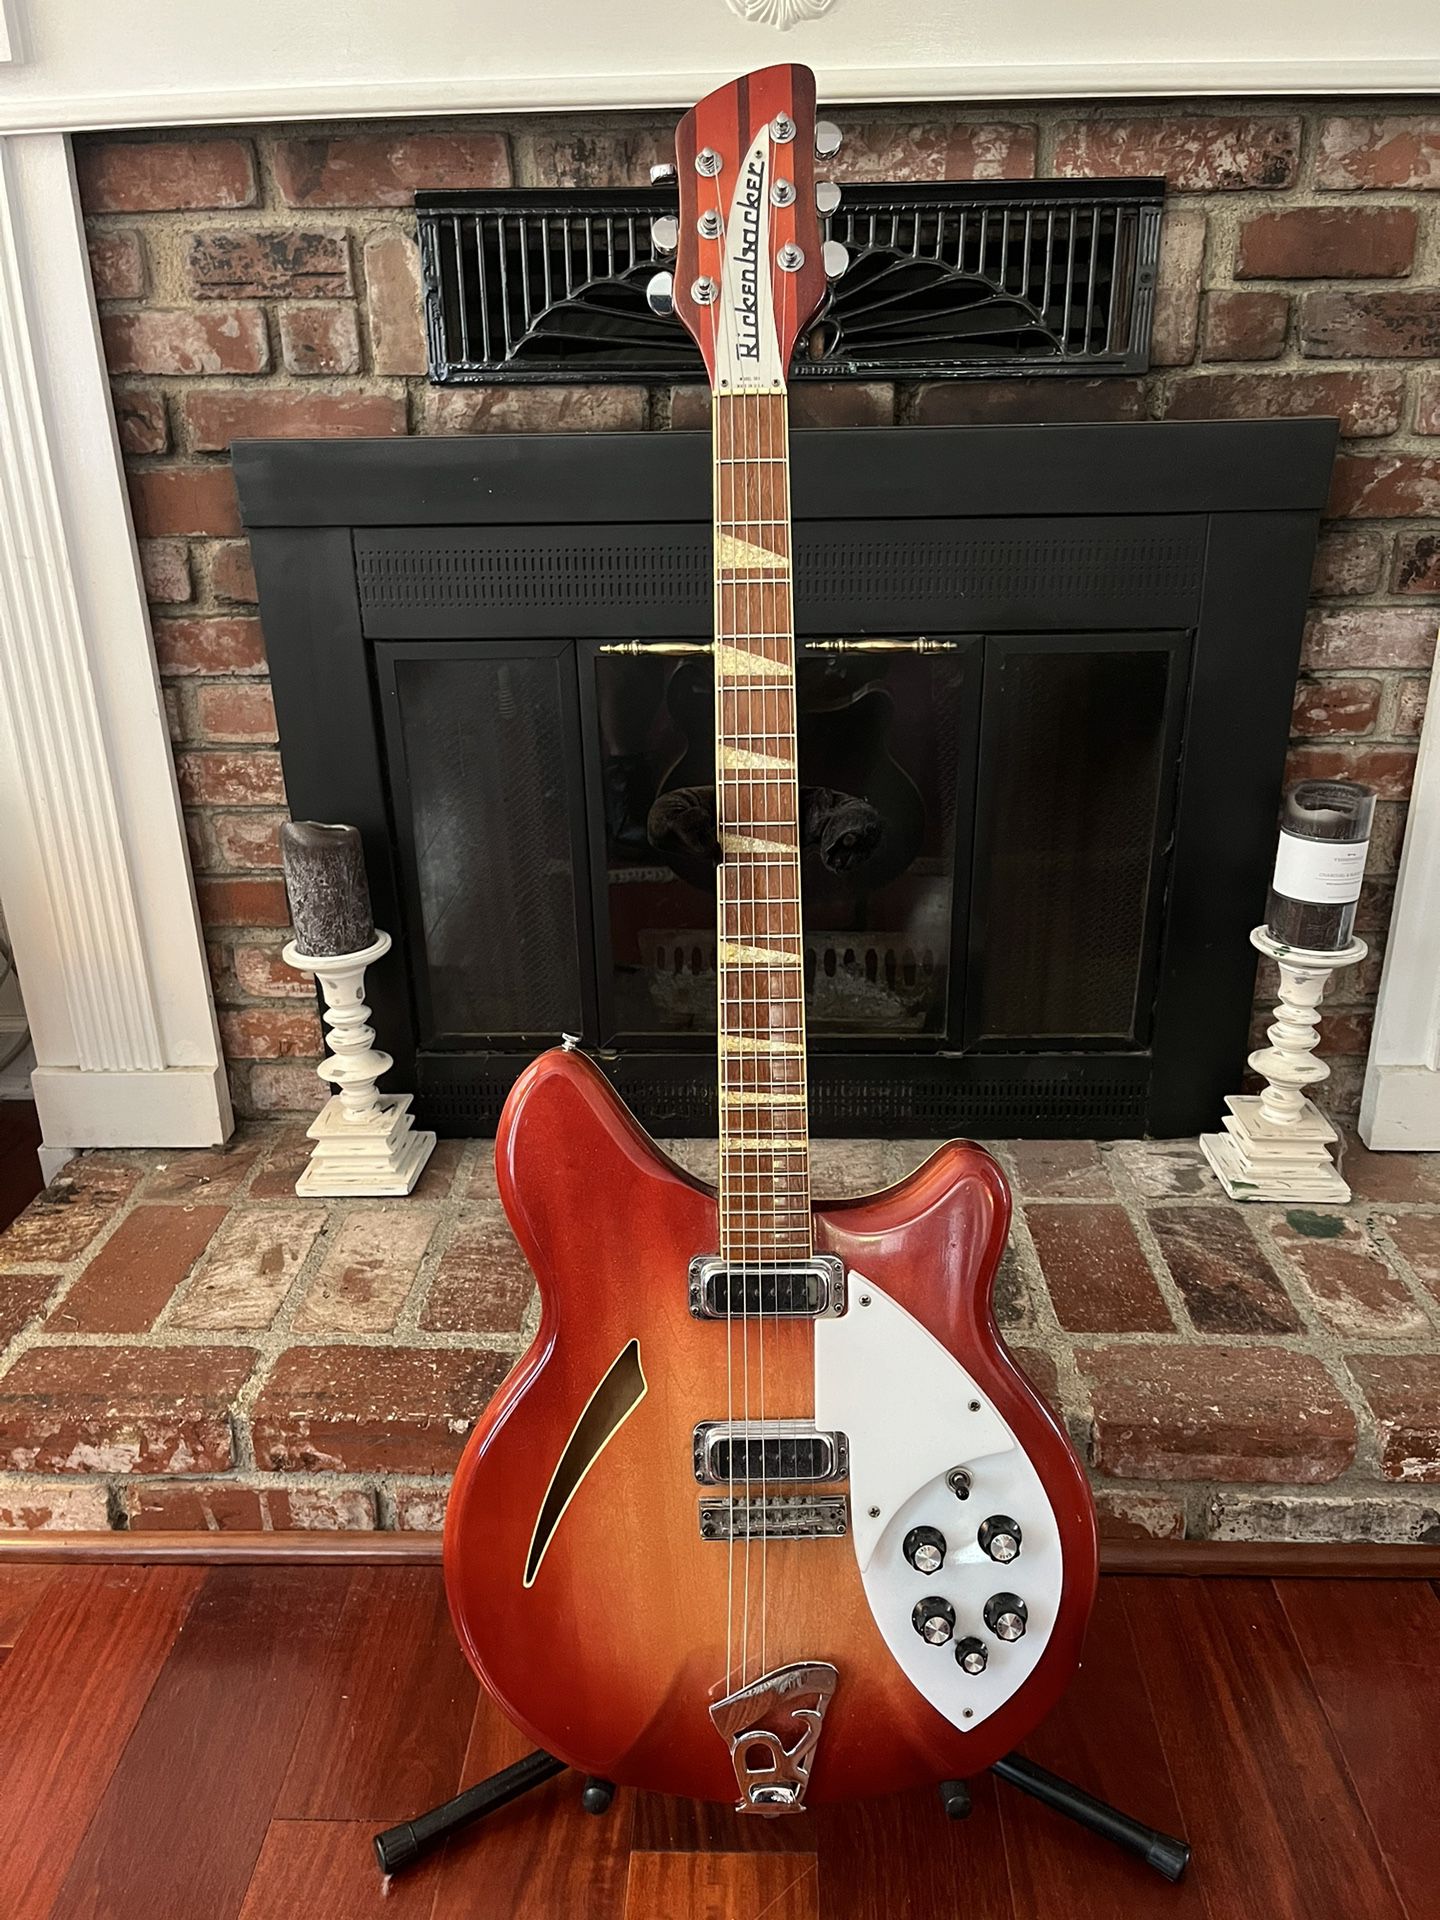 1973 Rickenbacker 360 Guitar - $2,500.